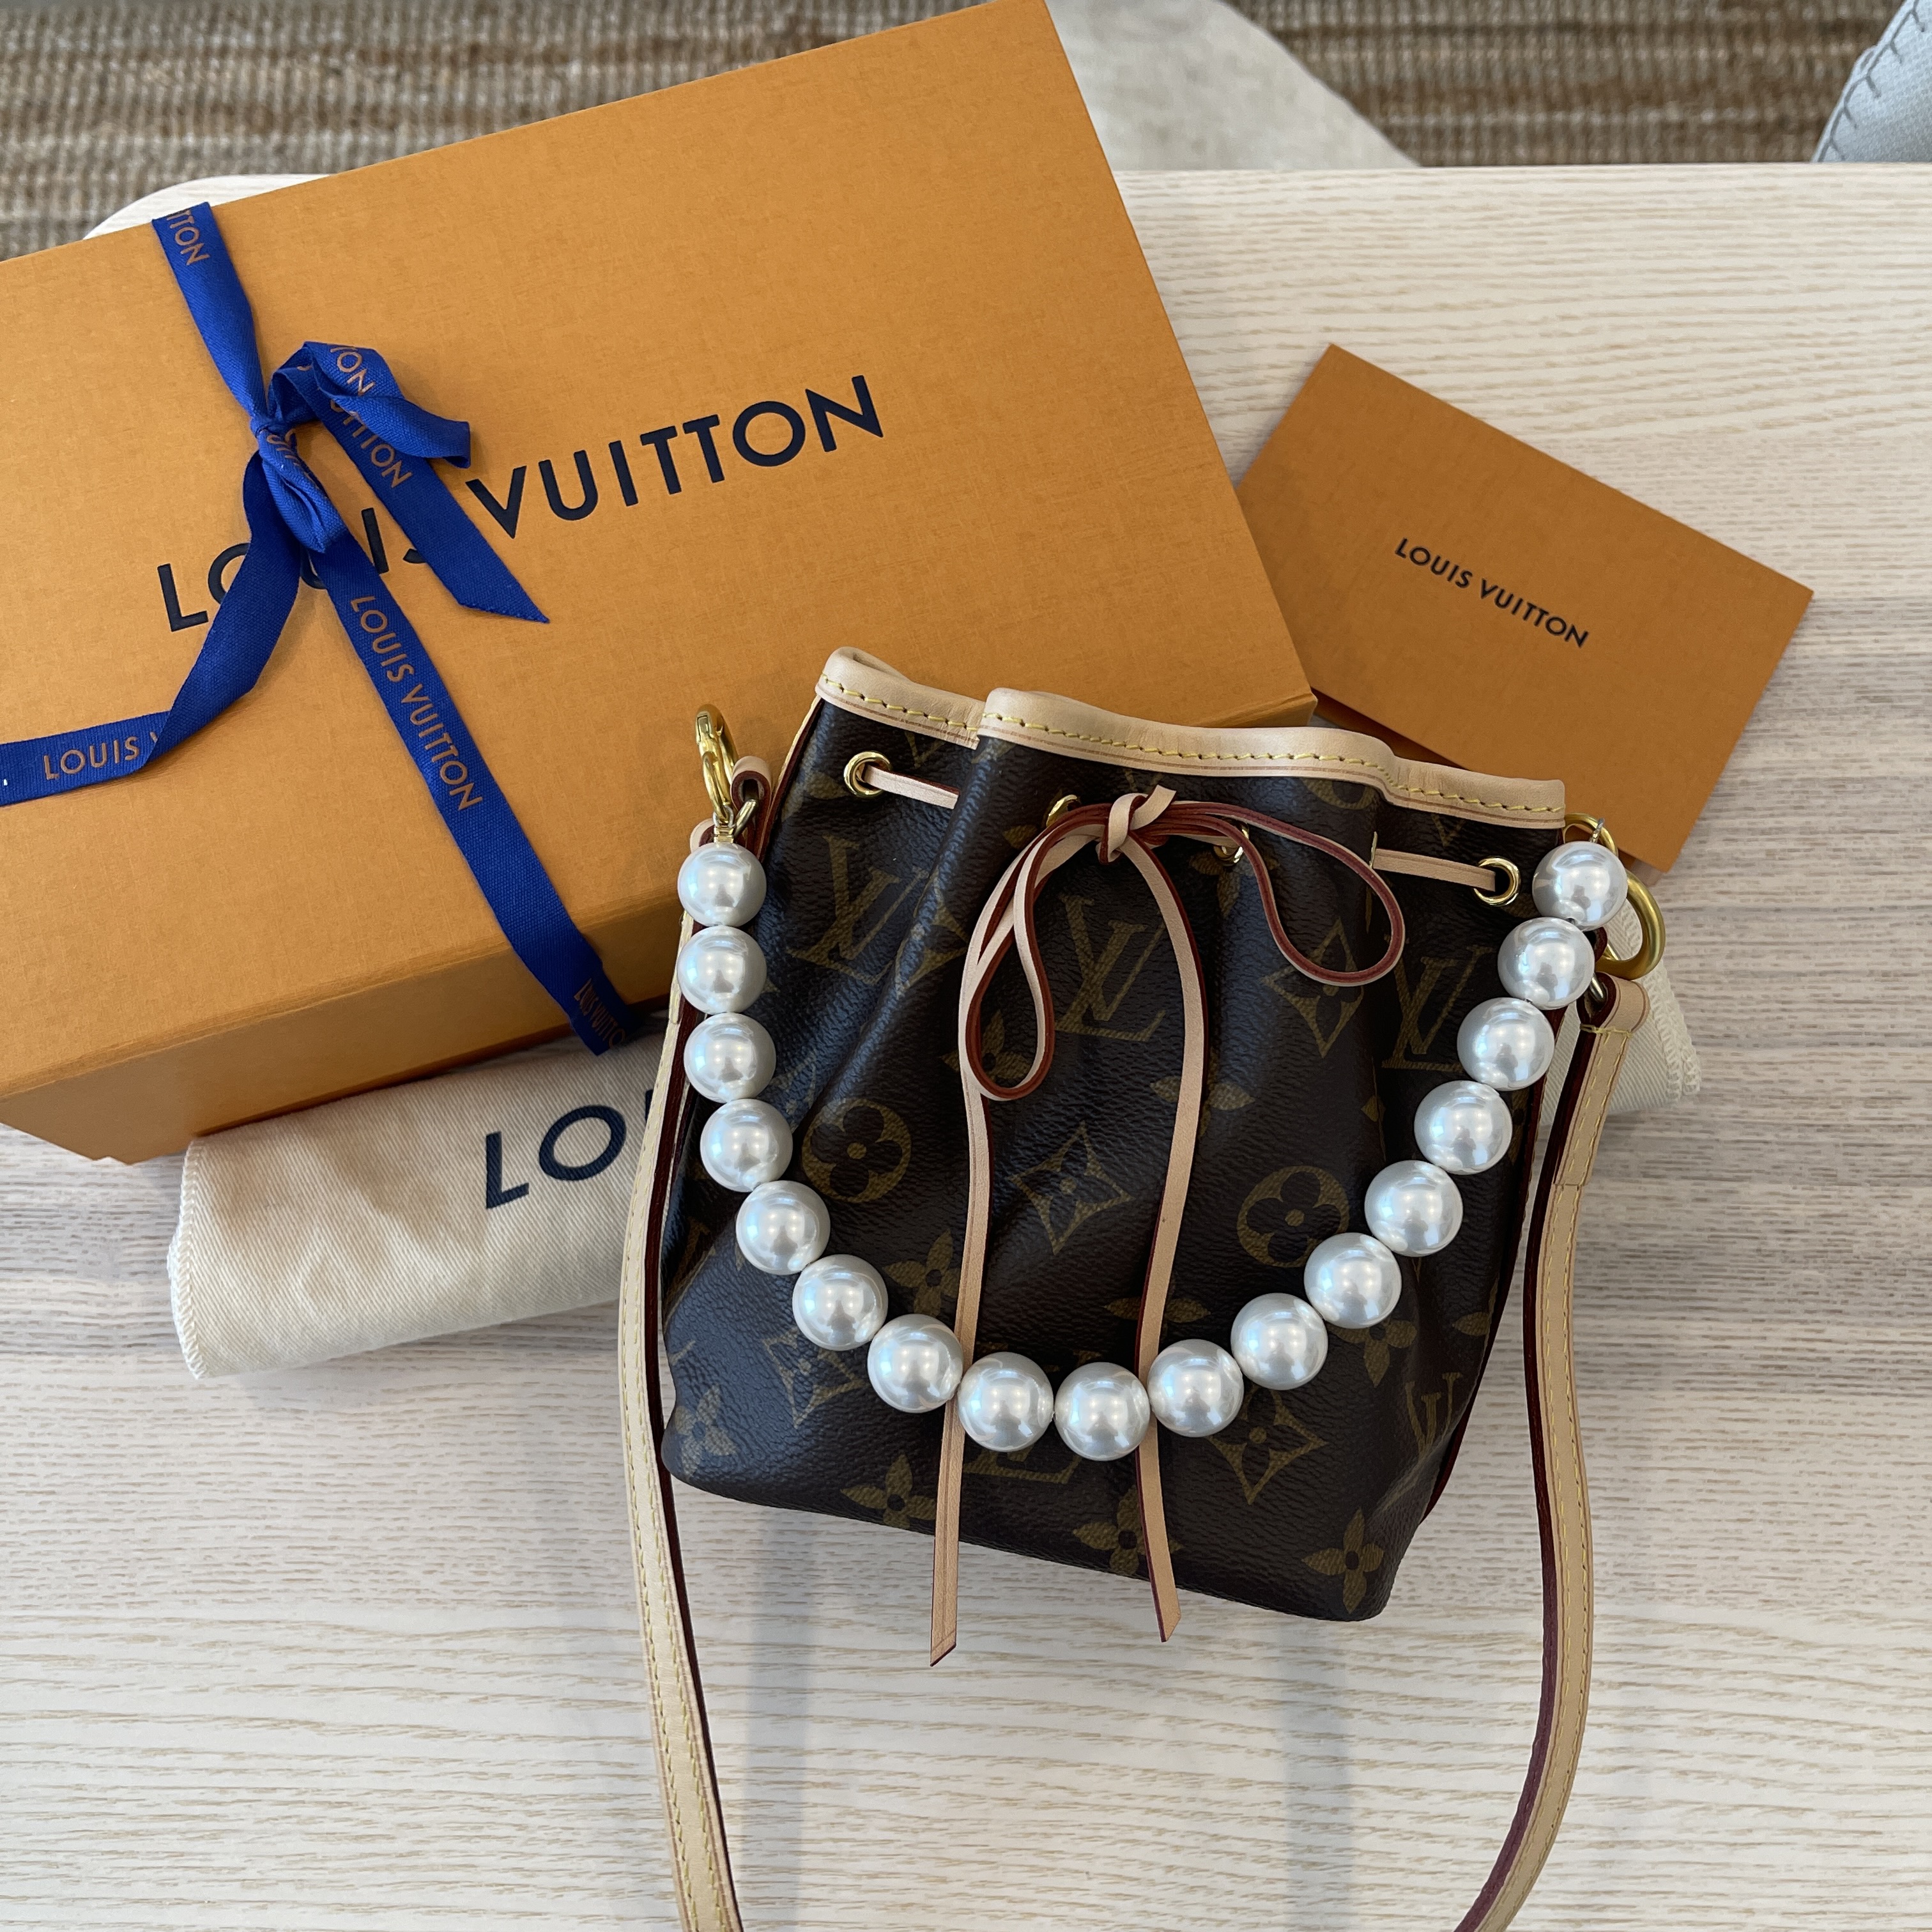 Other, Receipt For Louis Vuitton Earrings